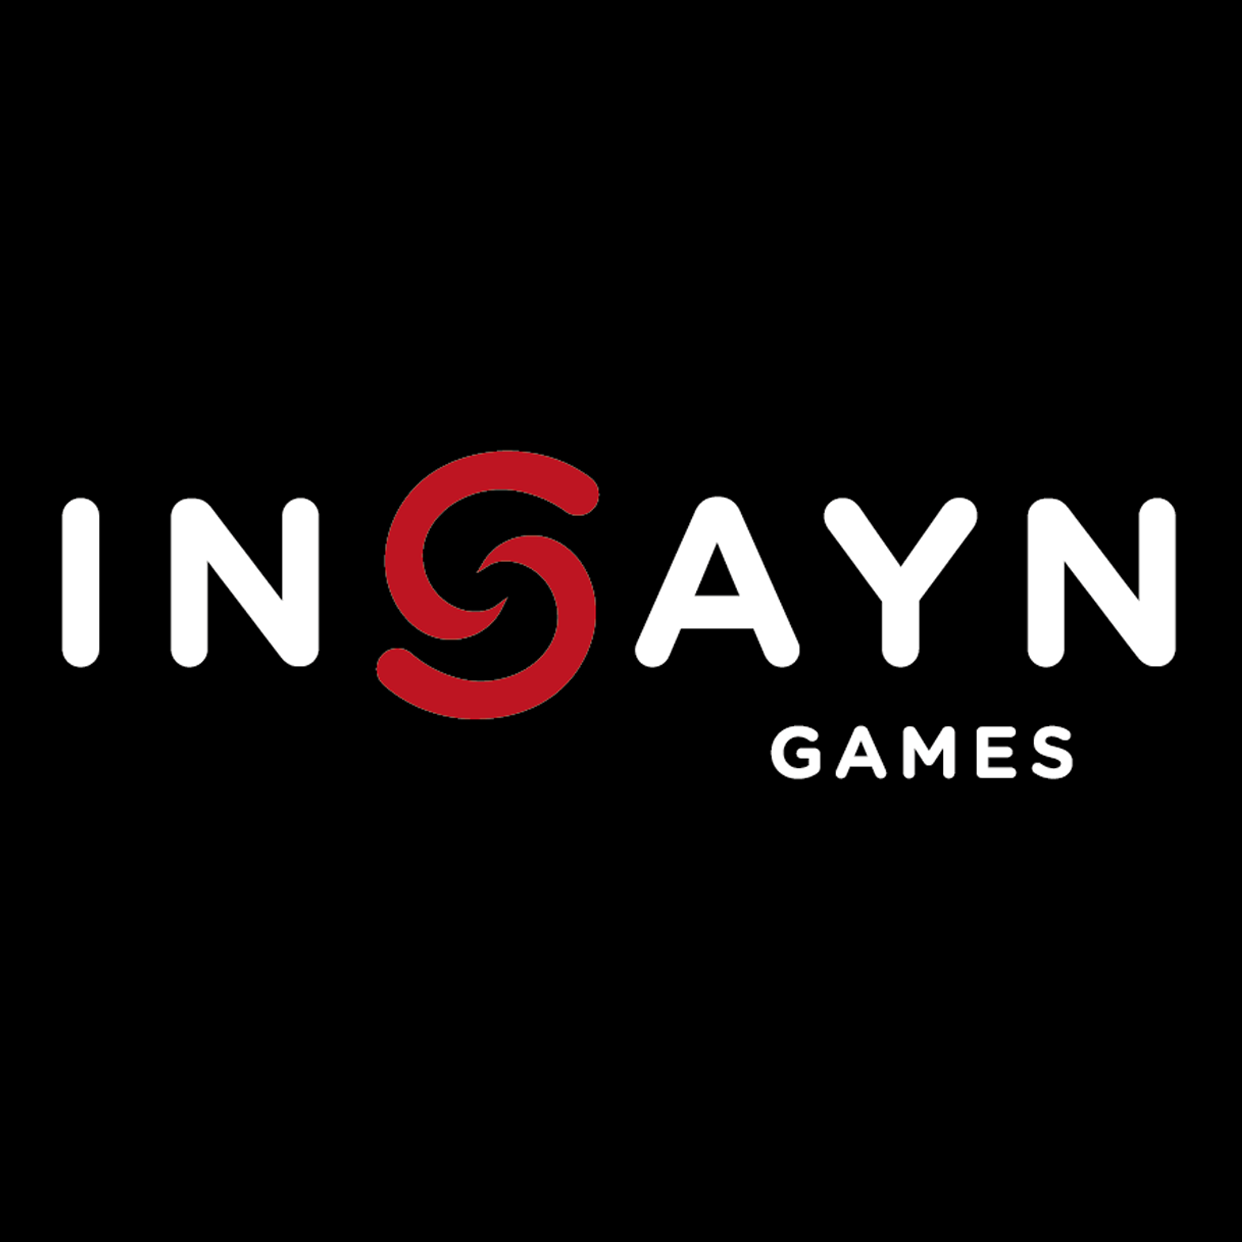 InSayn Logo InSayn Games Black